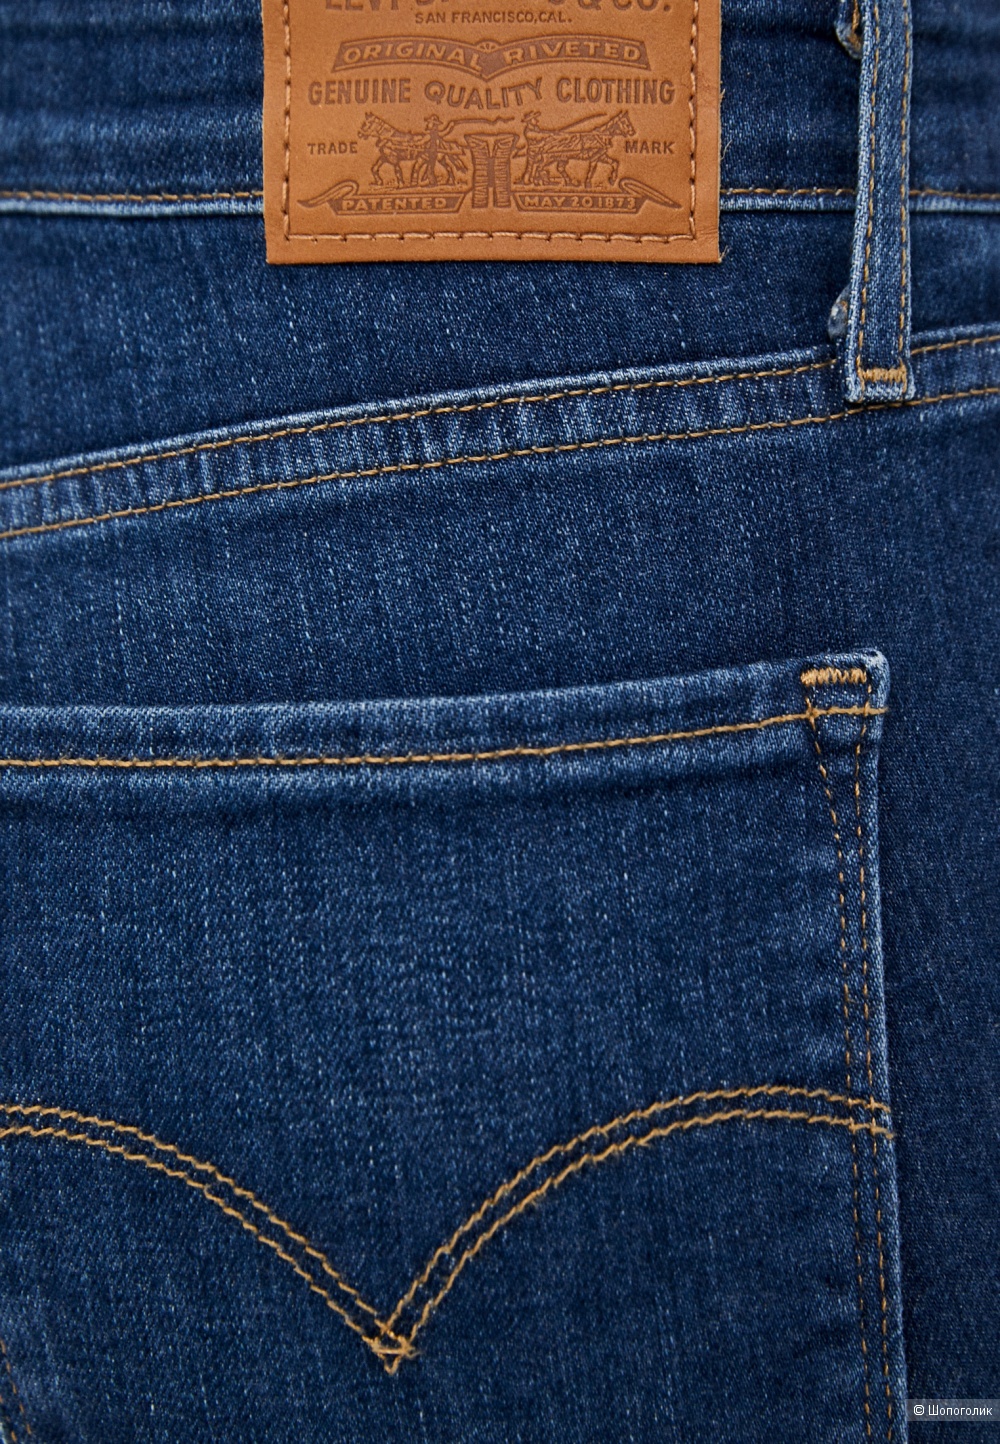 Джинсы Levi's mile high super skinny jeans levis, размер 30